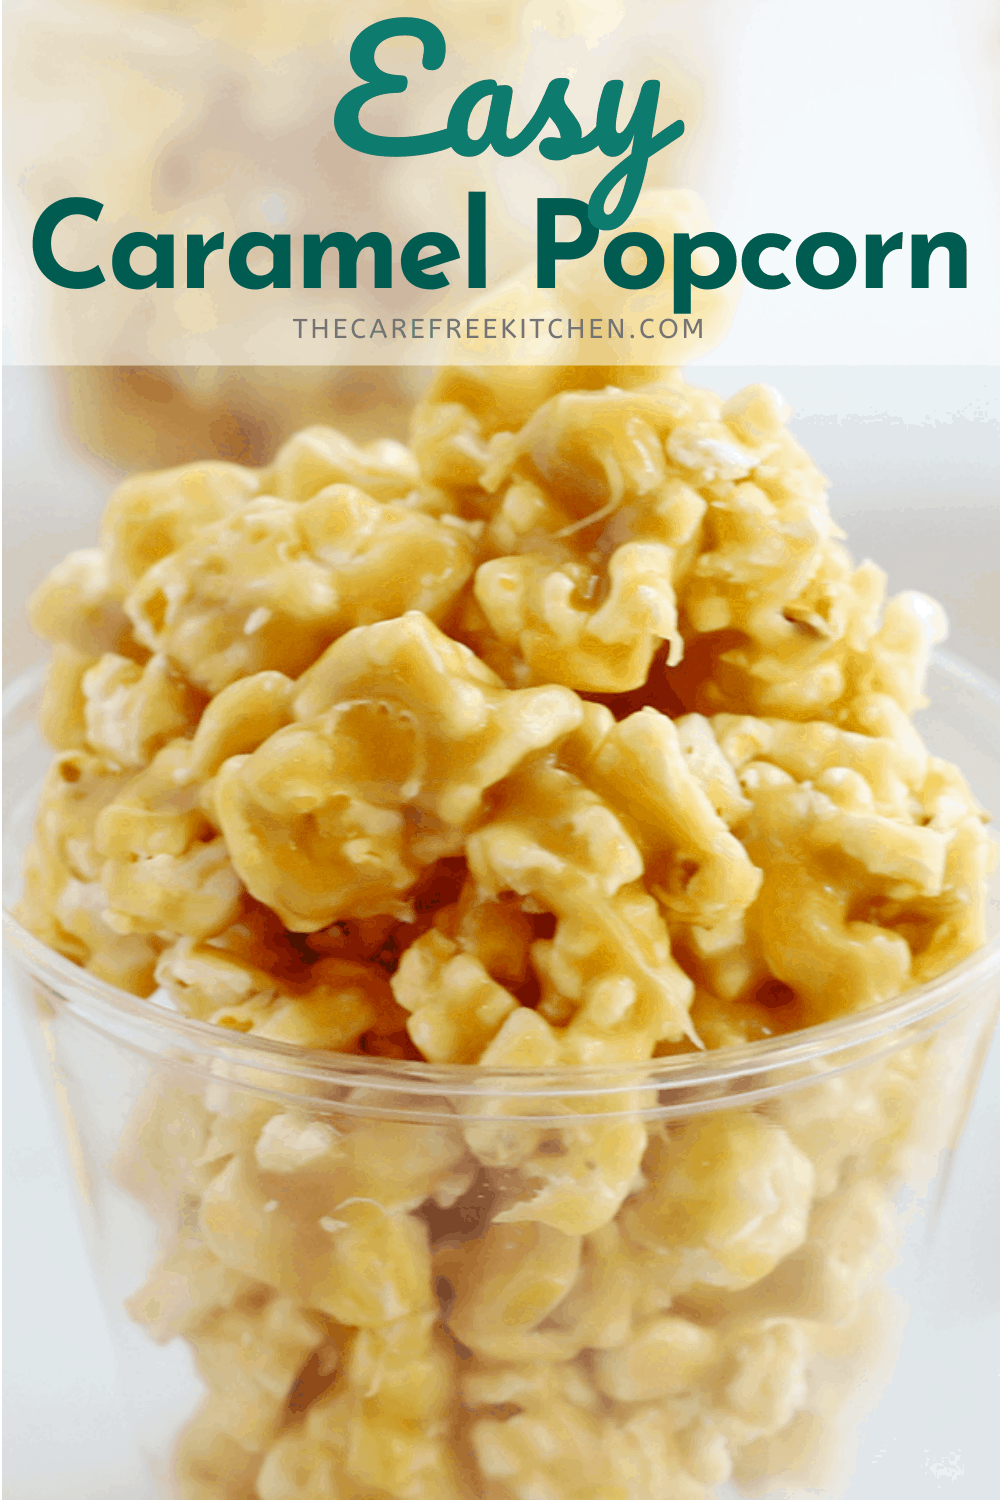 how to make the best caramel popcorn, easy no bake dessert recipe, diy caramel popcorn. home made caramel popcorn recipe. 